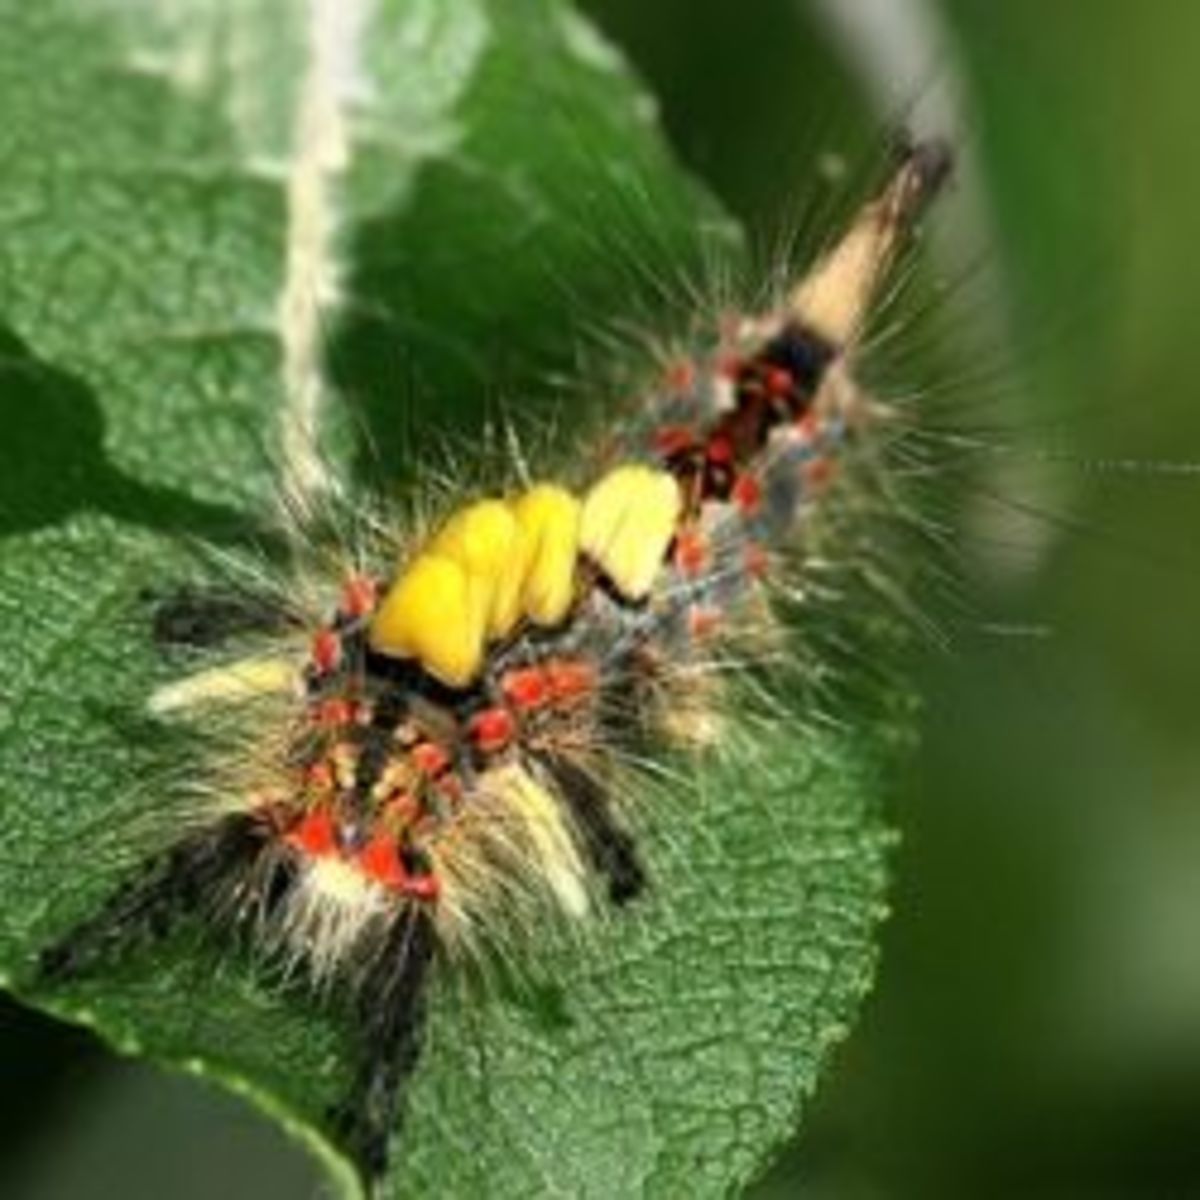 A caterpillar of Orgyia antiqua